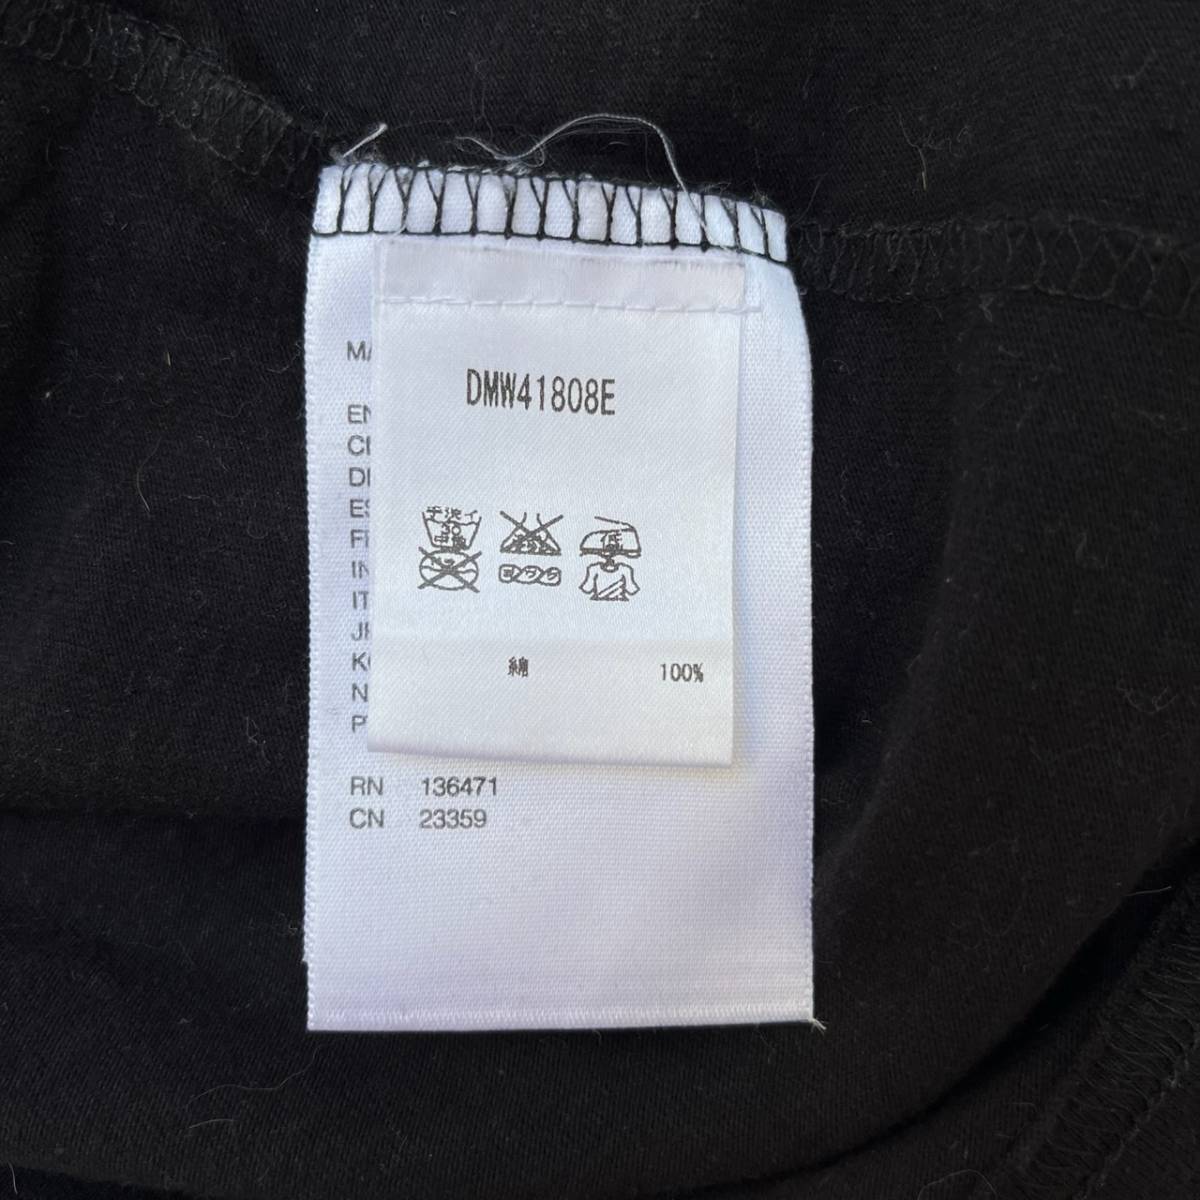 Deus Ex Machina デウスエクスマキナ Mサイズ ロゴ Tシャツ プリント ブラック